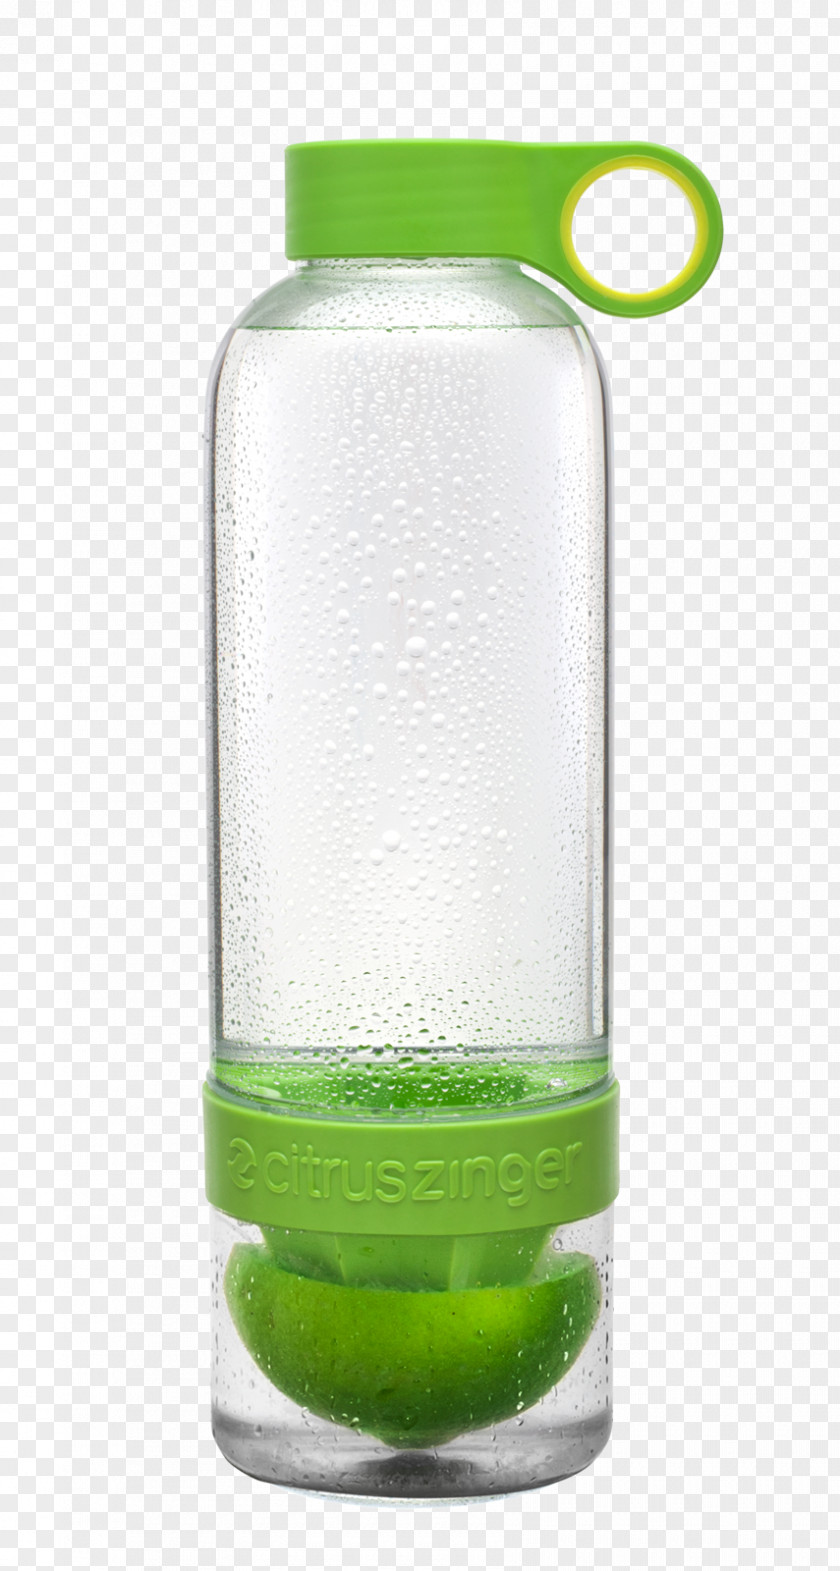 Water Bottle Juice Clementine Lemonade Drink PNG